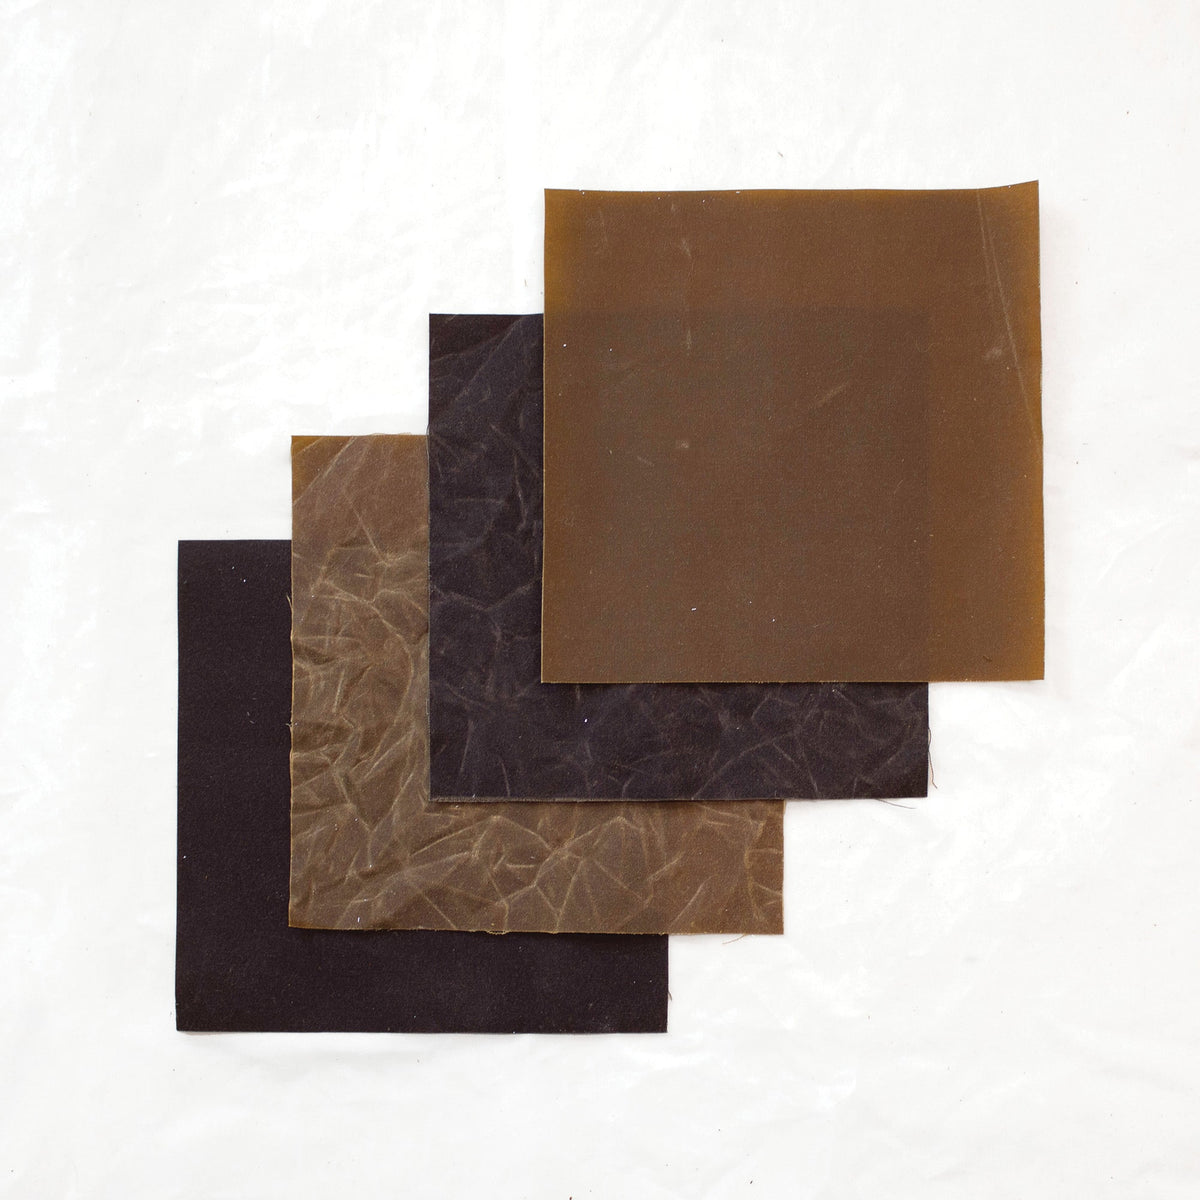 8 oz Waxed Canvas (18 x 58) - Caramel Brown